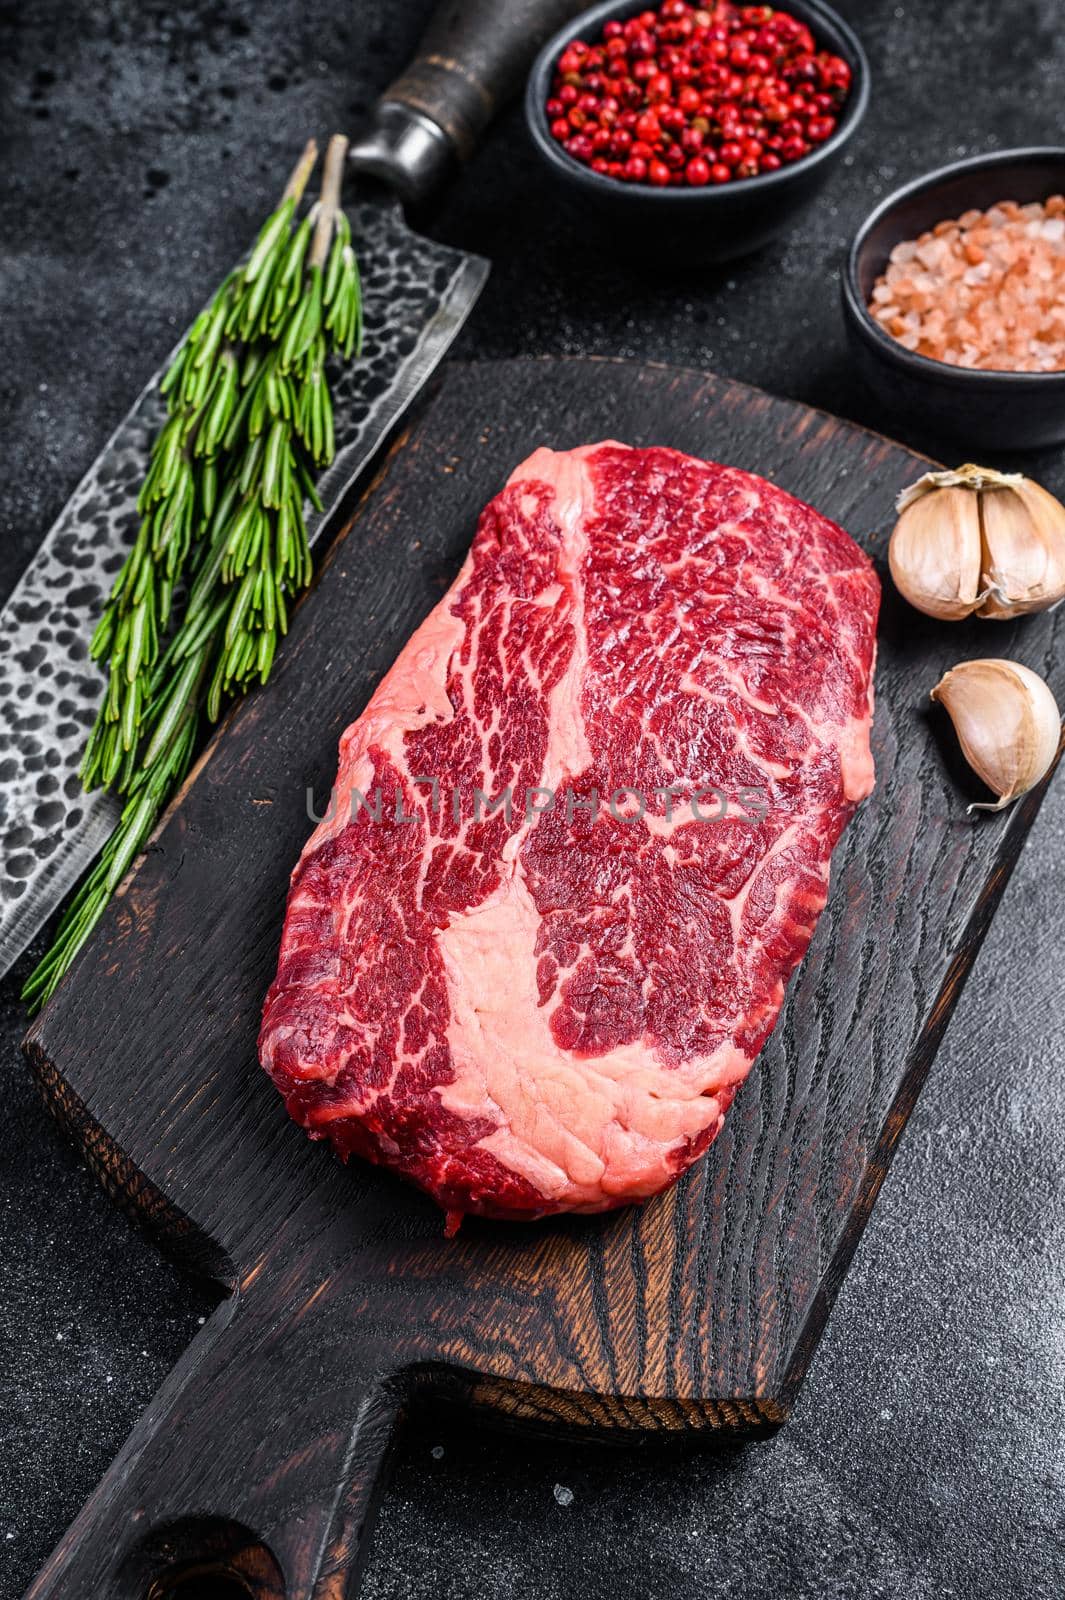 Black angus ribeye, raw rib-eye beef steak on a wooden board with knife. Black background. Top view.